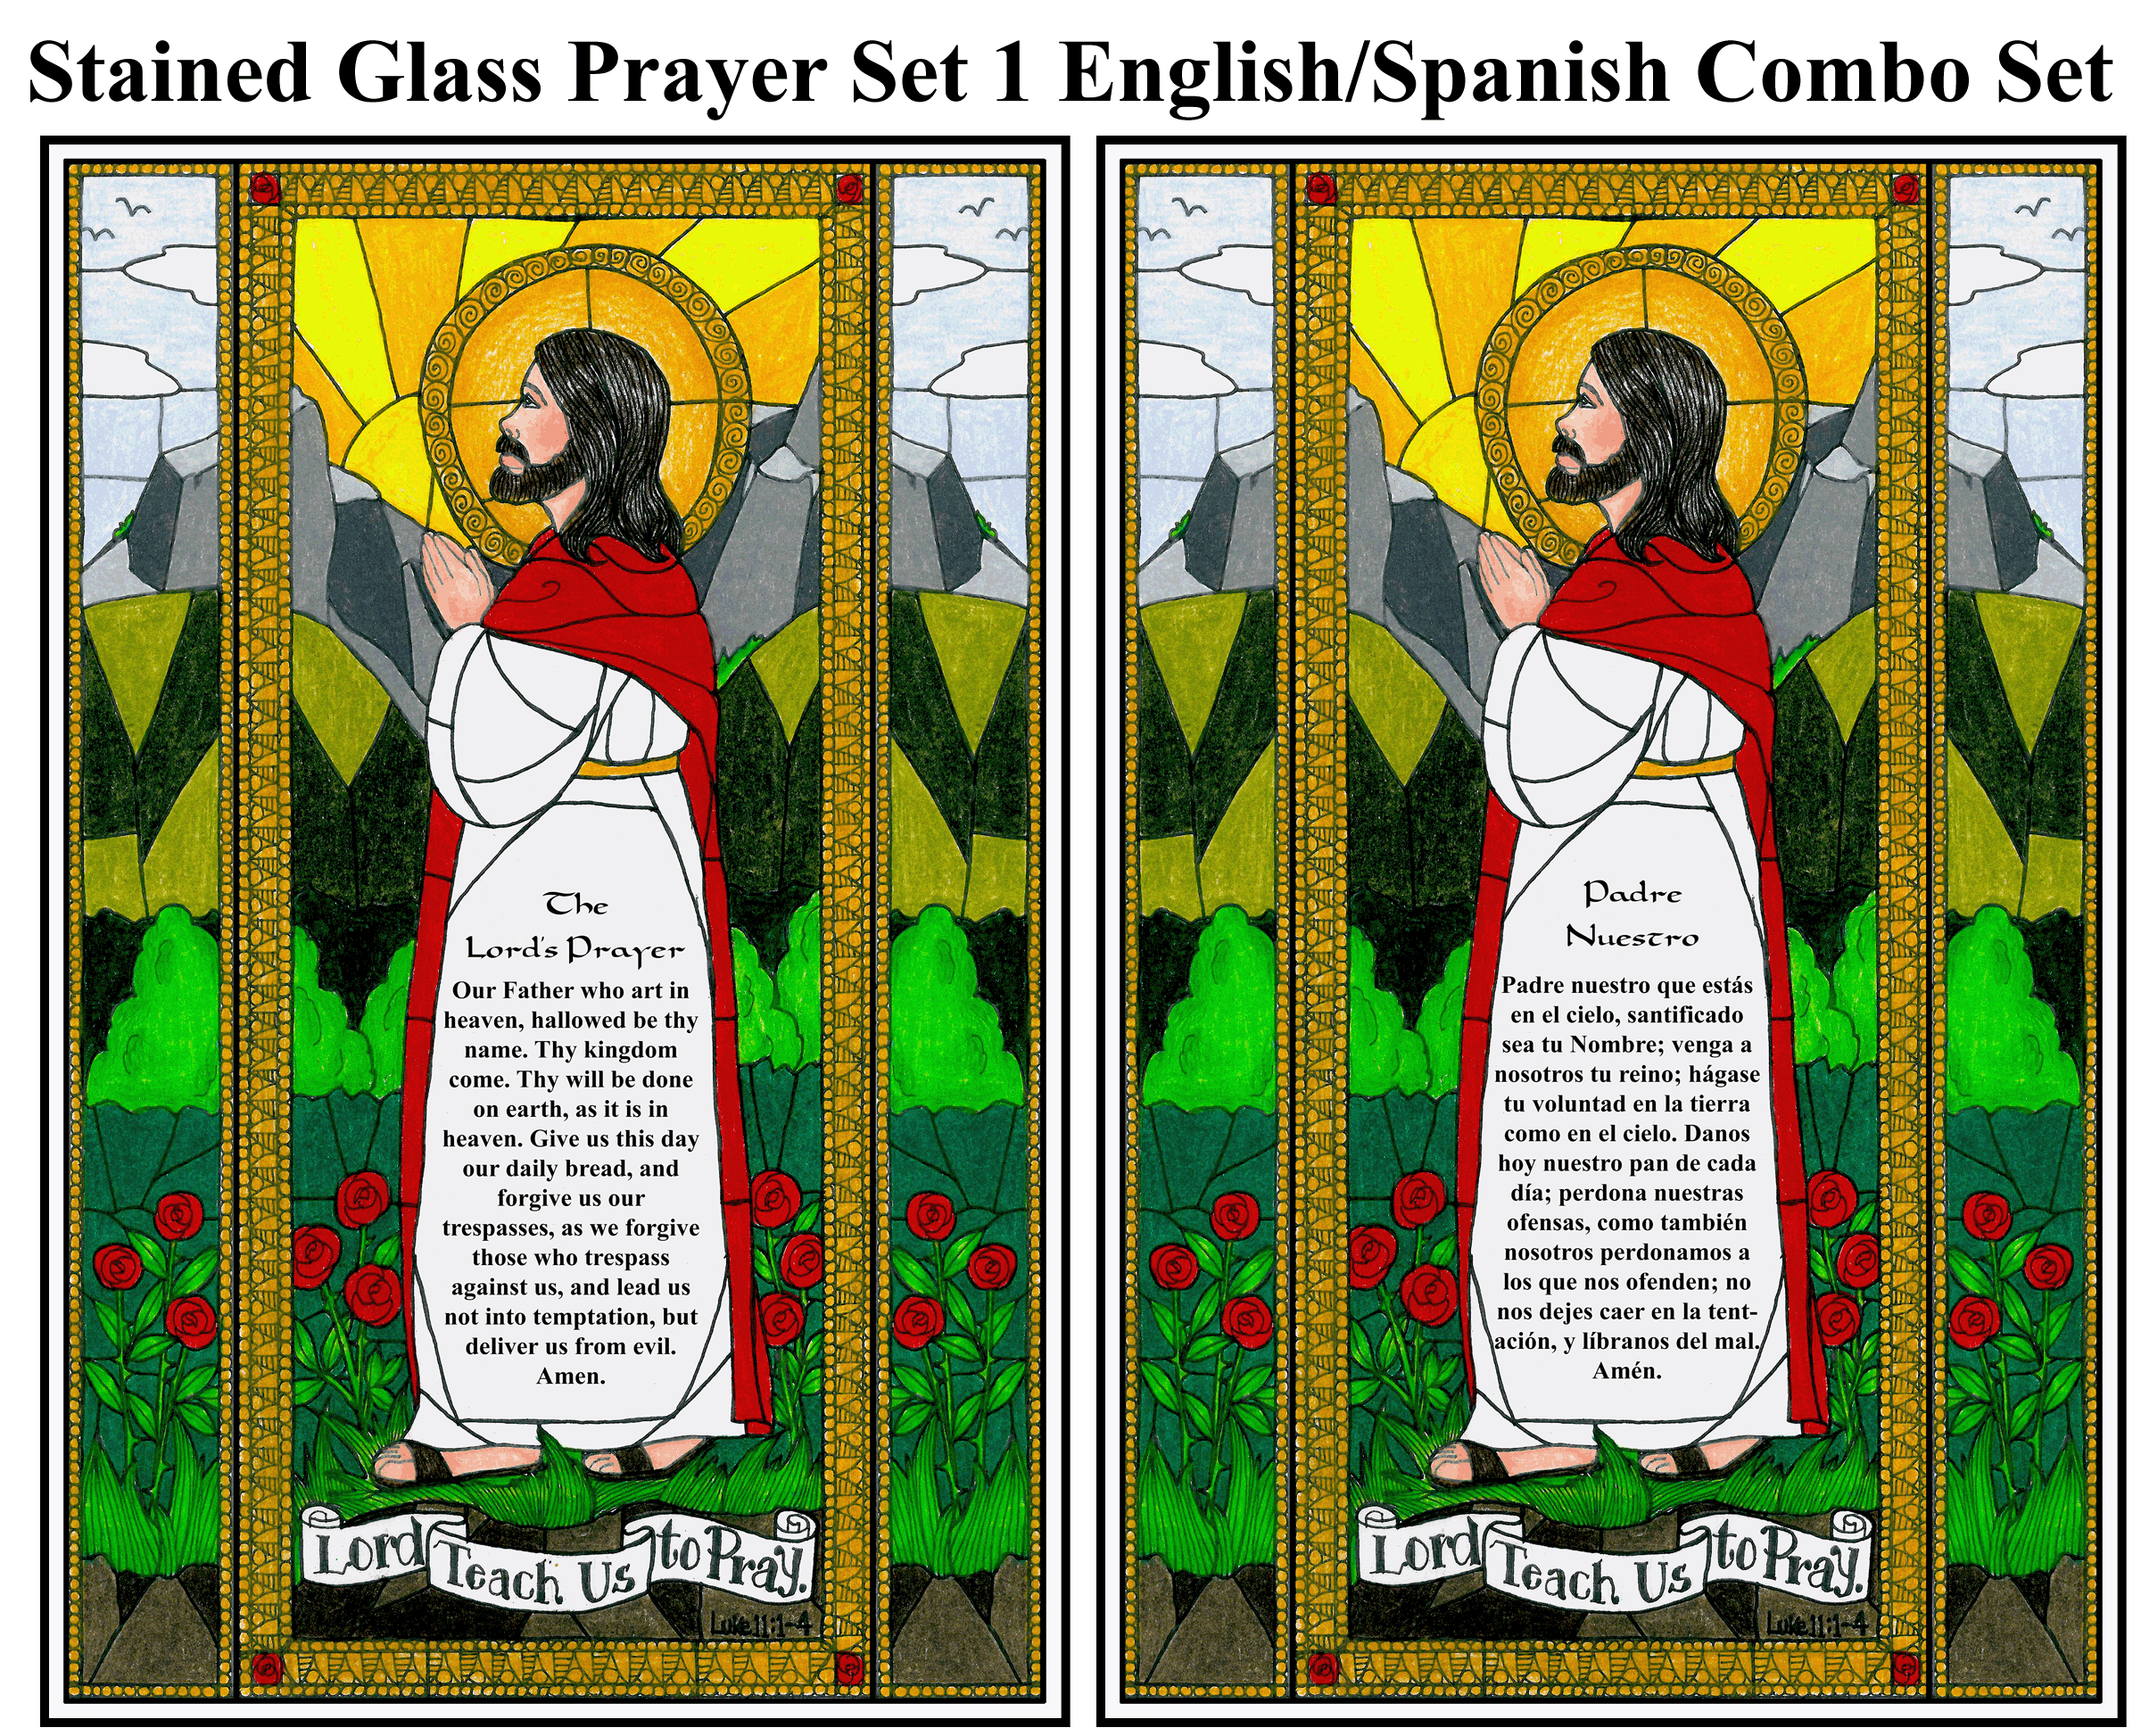 Stained Glass Prayer Set 1 - English/Spanish Combo